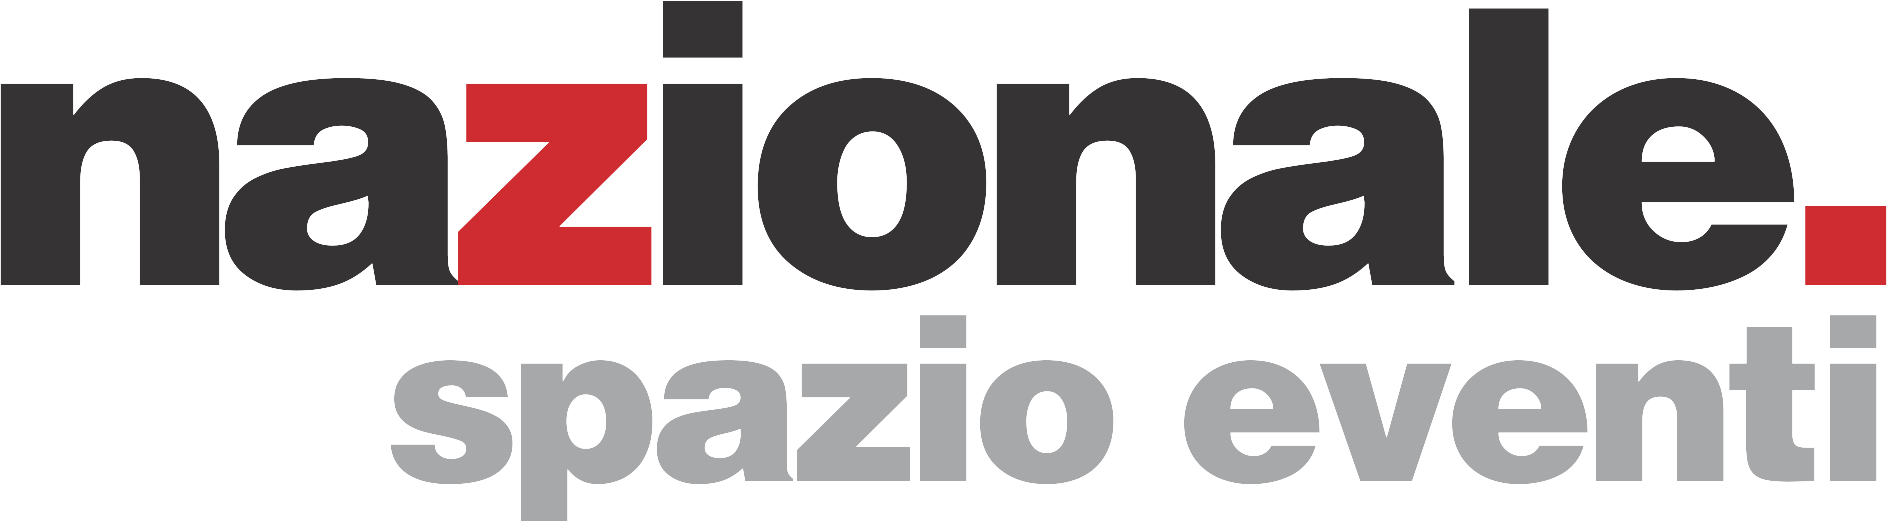 logo-u-visionary-roma